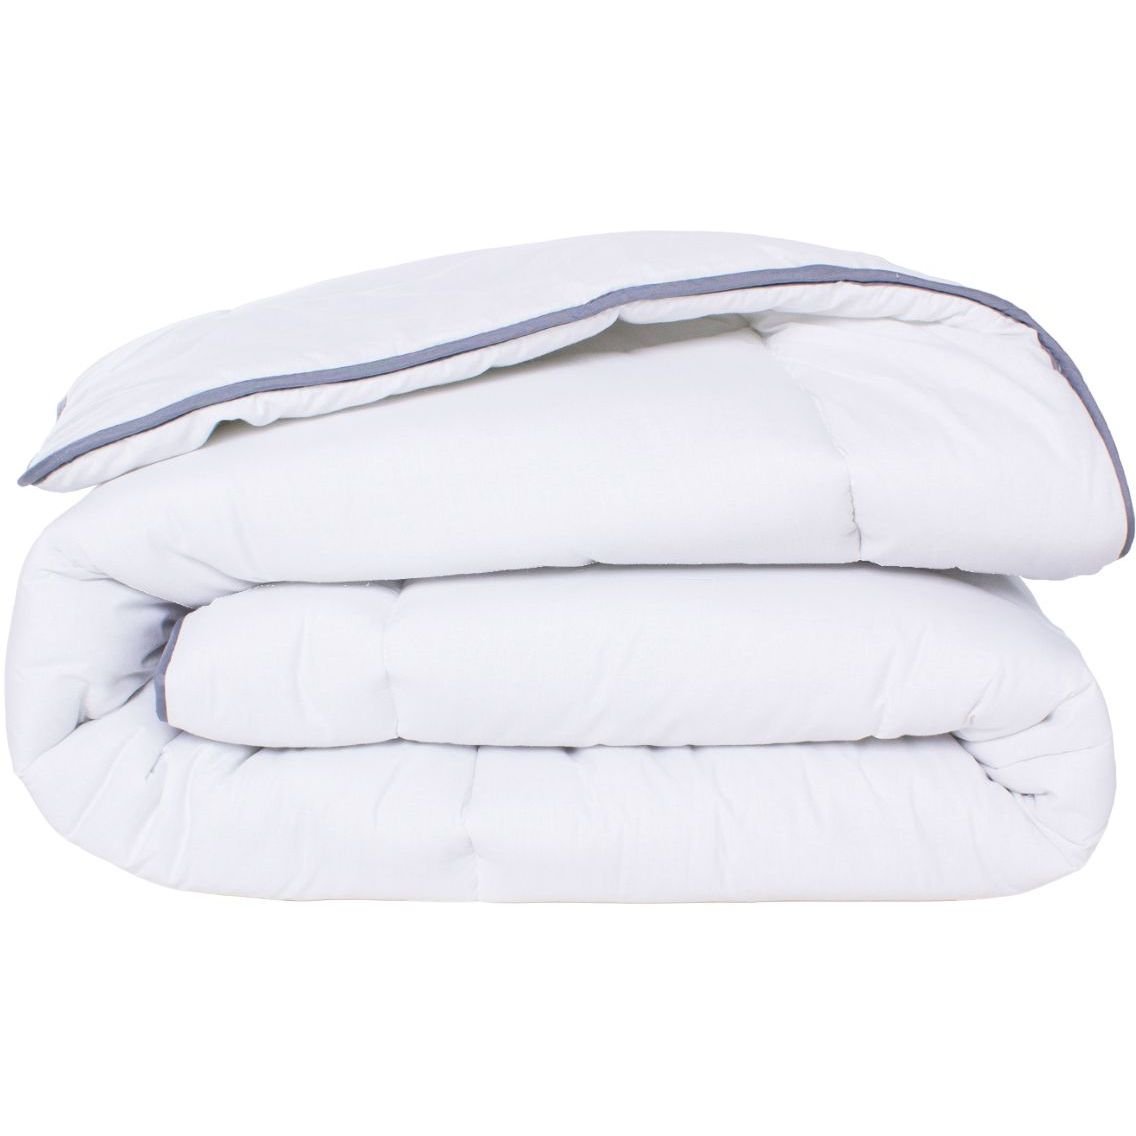 Одеяло шерстяное MirSon Royal №026, демисезонное, 140x205 см, белое - фото 1